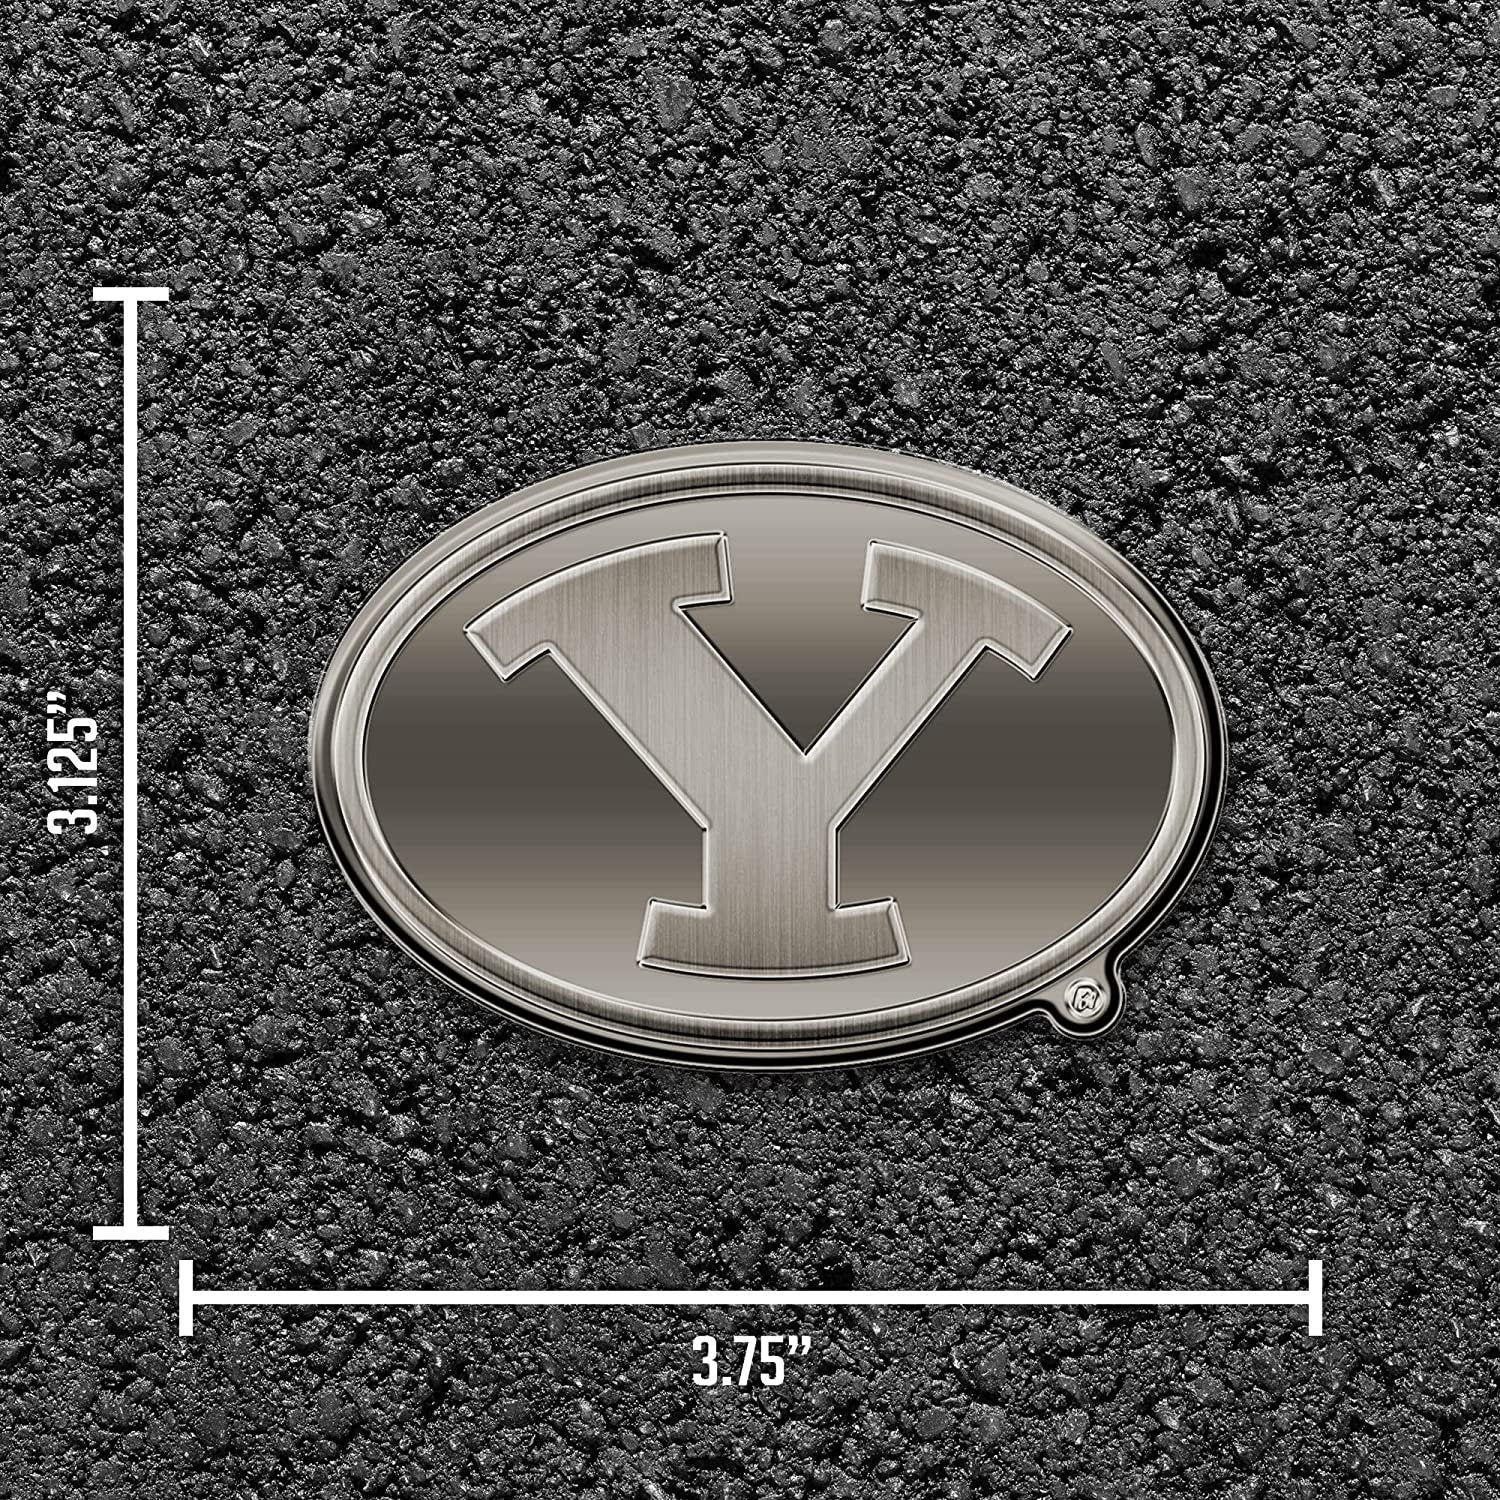 Brigham Young University BYU Cougars Premium Solid Metal Raised Auto Emblem, Antique Nickel Finish, Shape Cut, Adhesive Backing